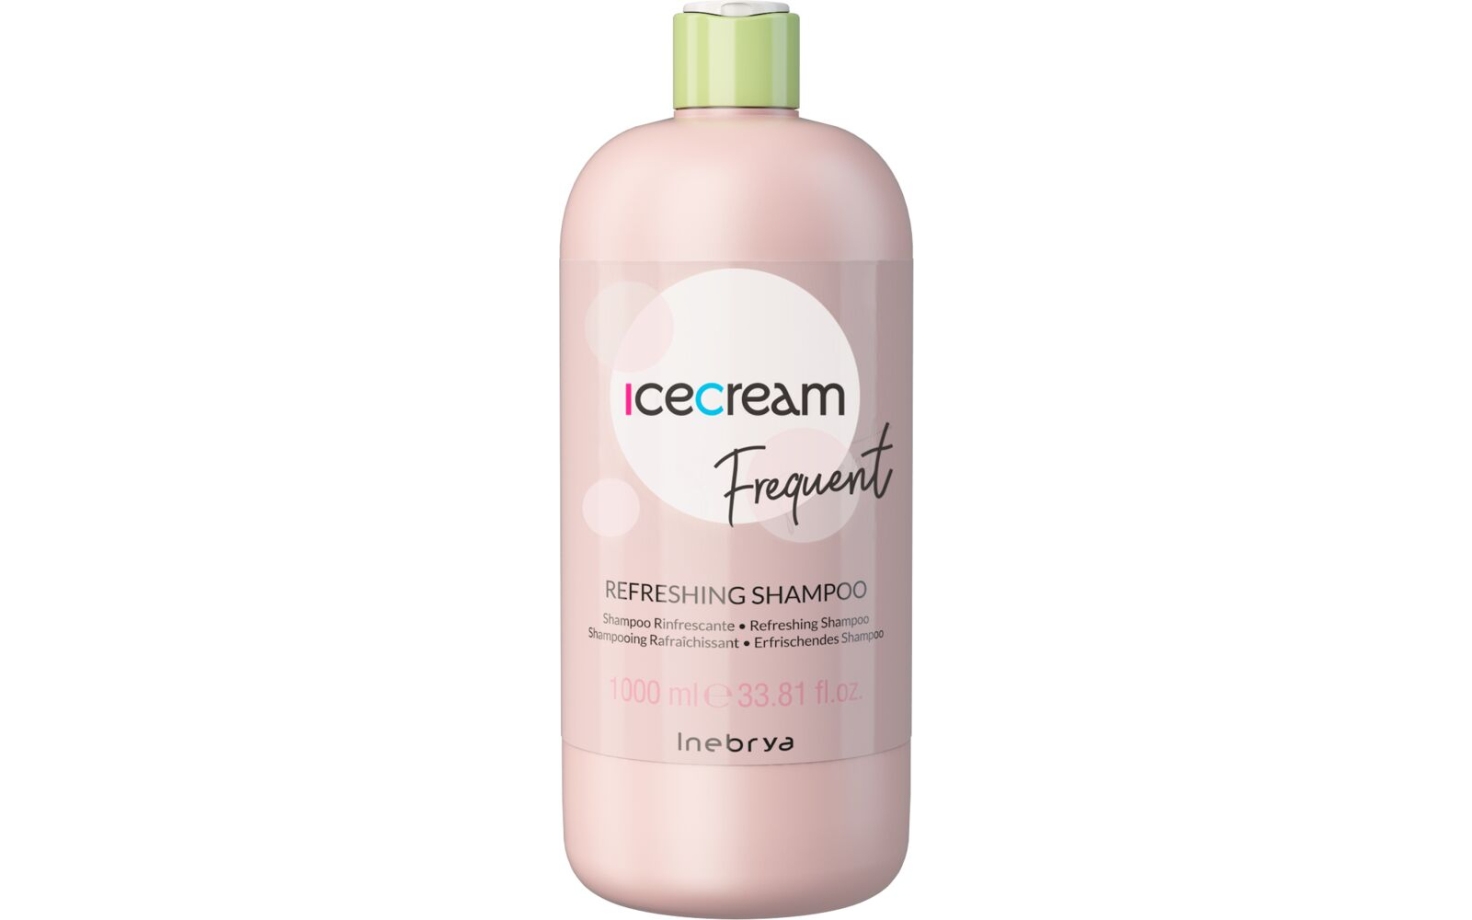 Icecream Frequent Refreshing Shampoo 1 Liter